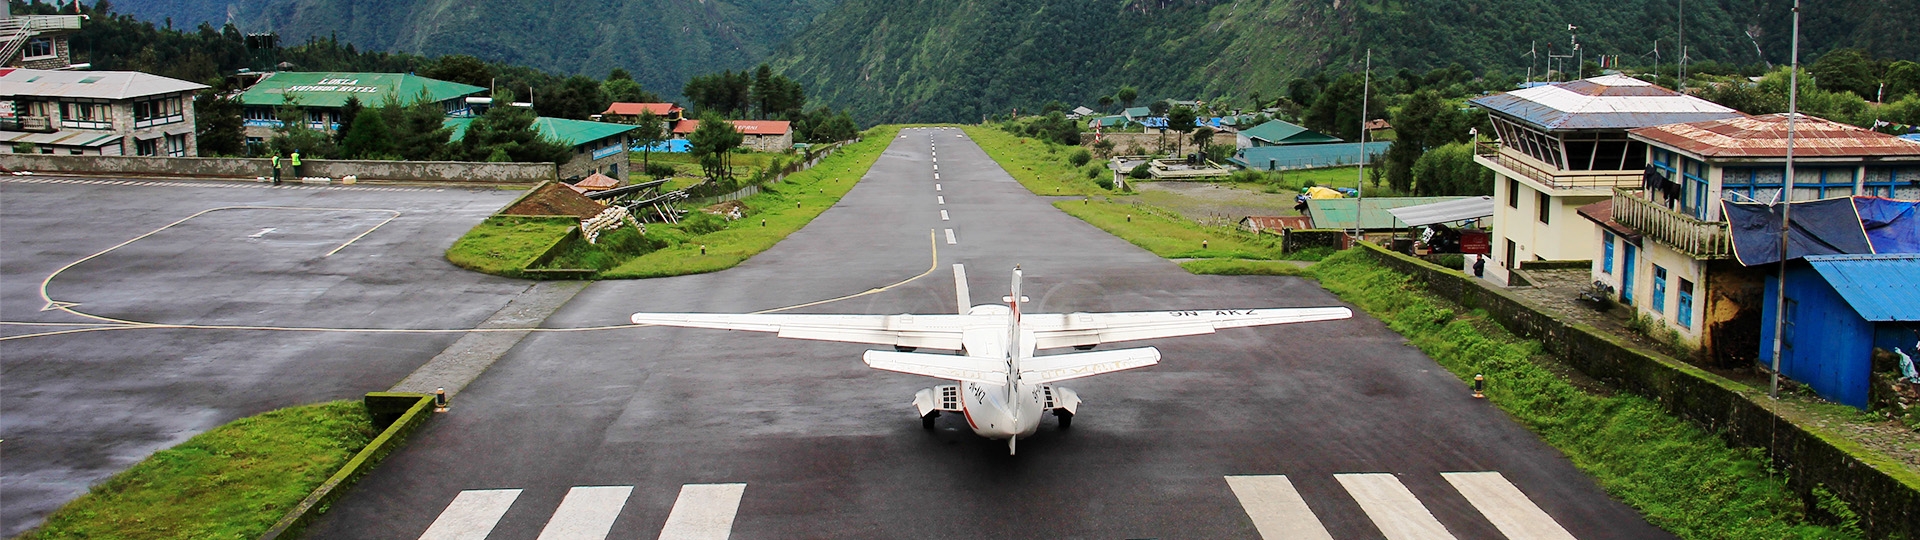 Lukla Airport, Gateway of Mt. Everest